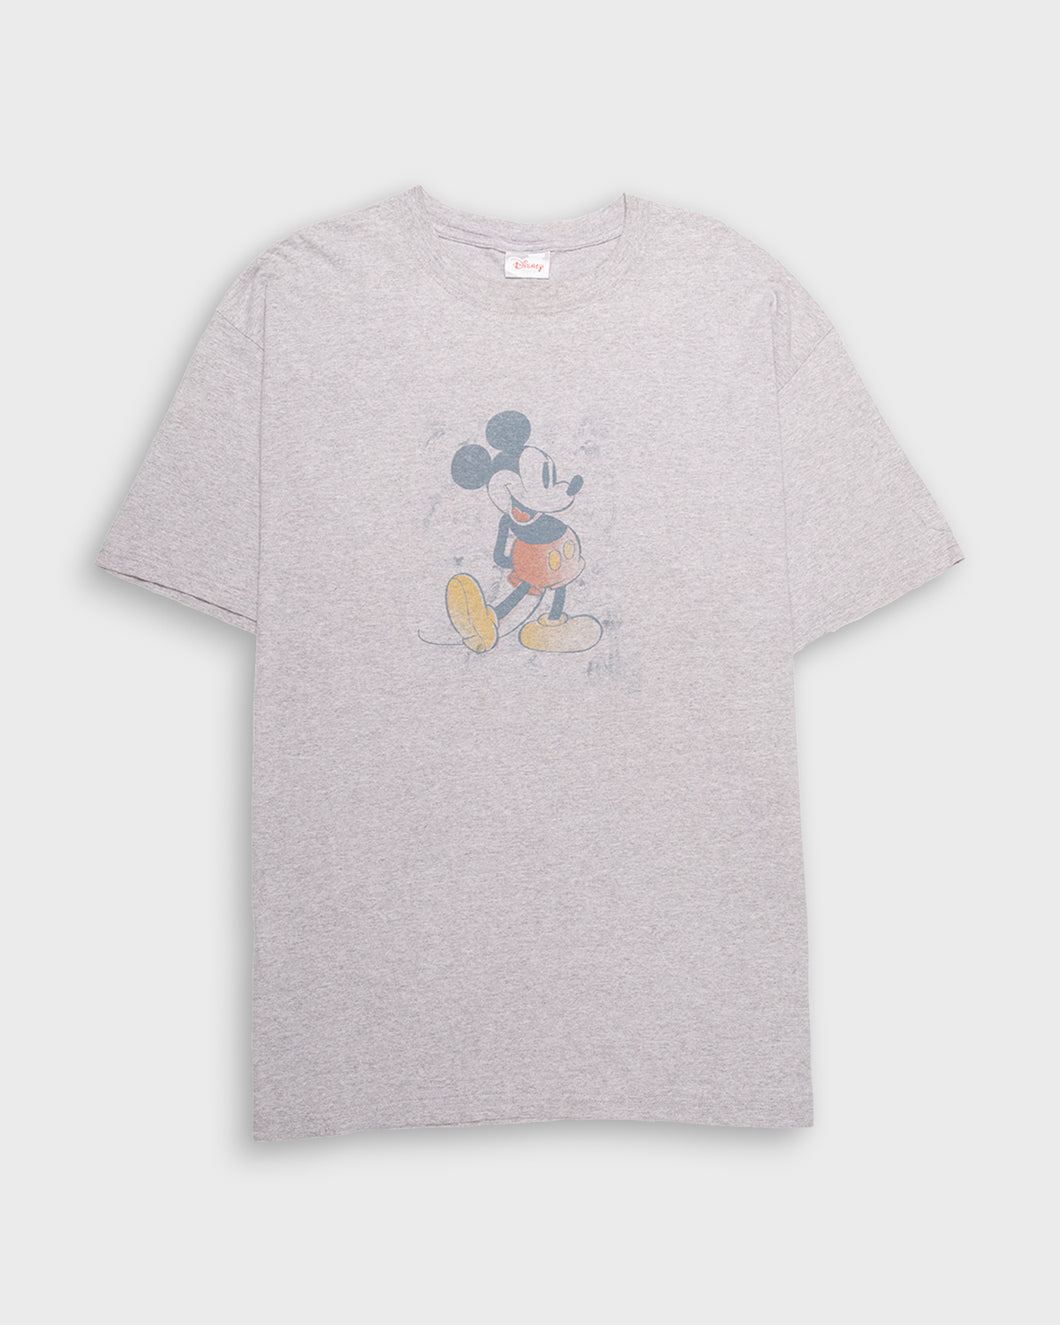 Grey crew neck Disney t-shirt